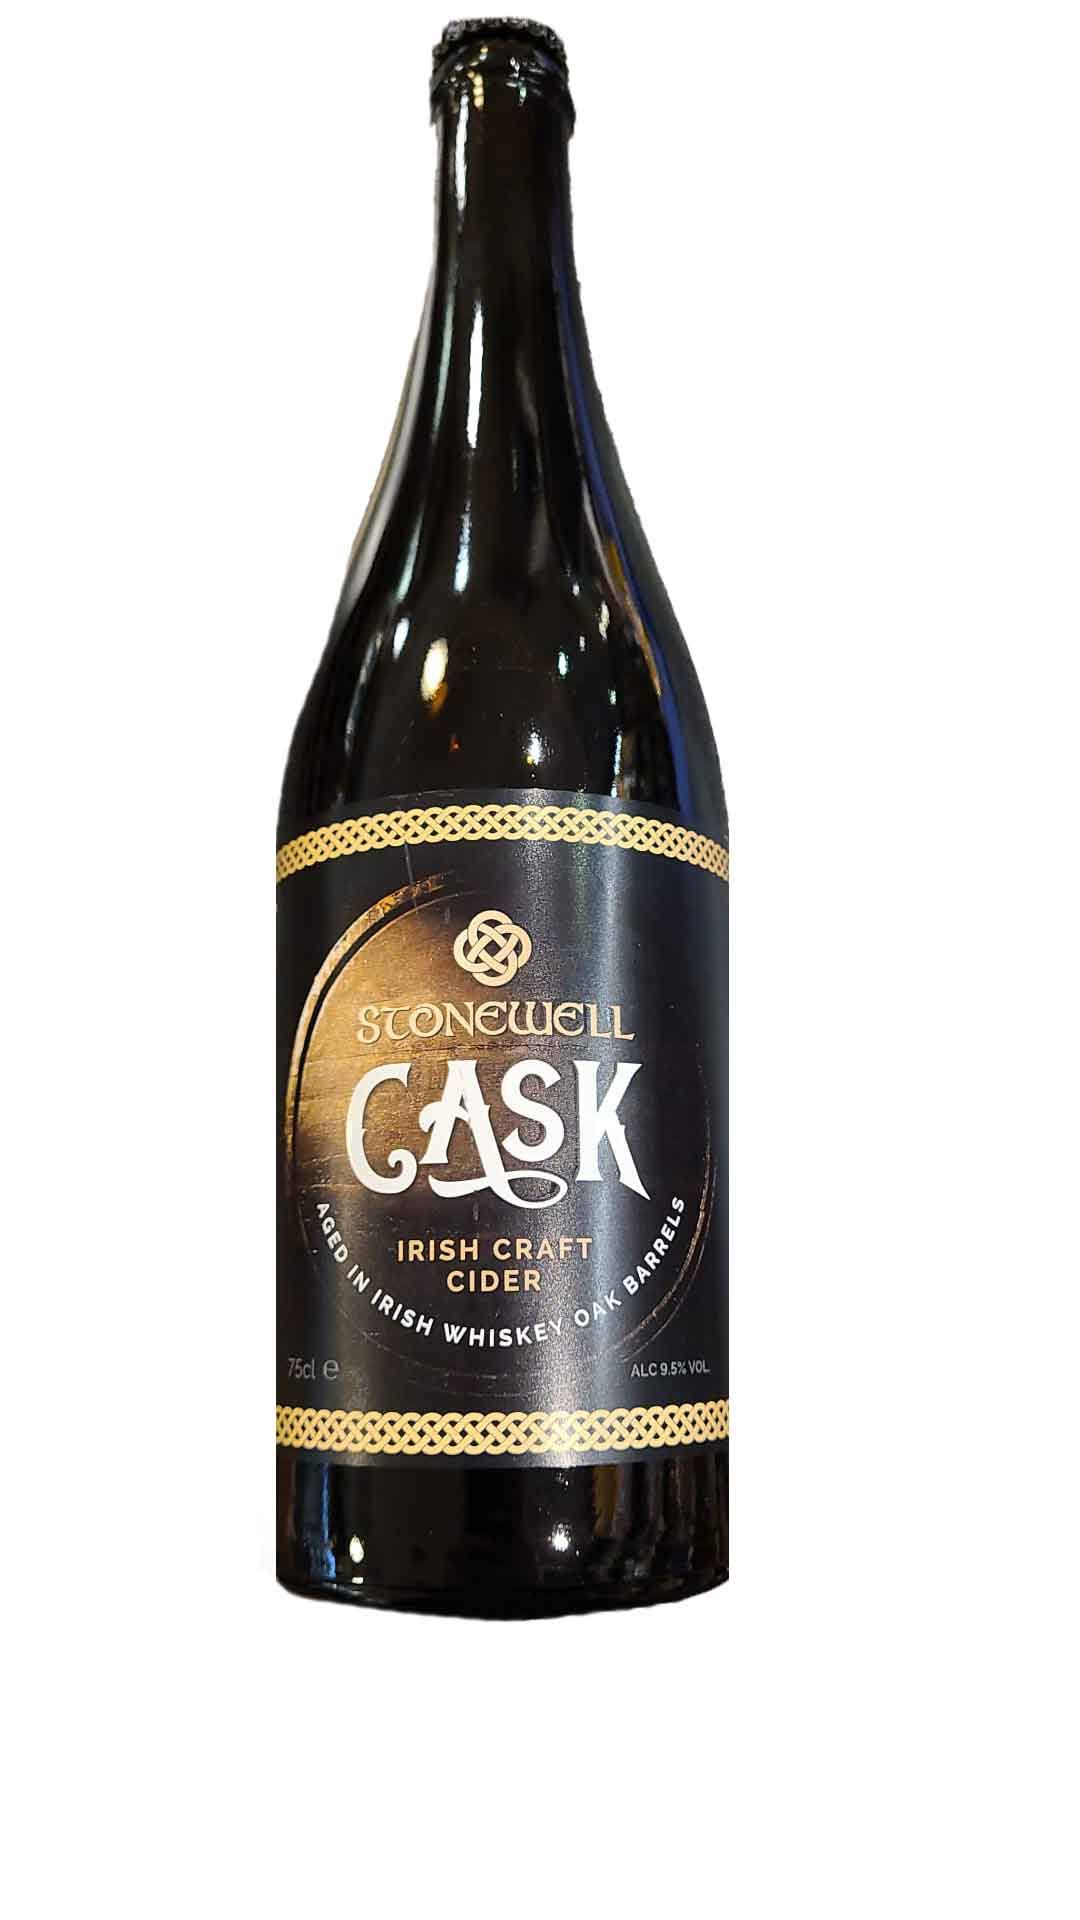 Stonewell - Cask Irish Craft Cider Aged in Irish Whiskey Oak Barrels 9.5% ABV 750ml Bottle